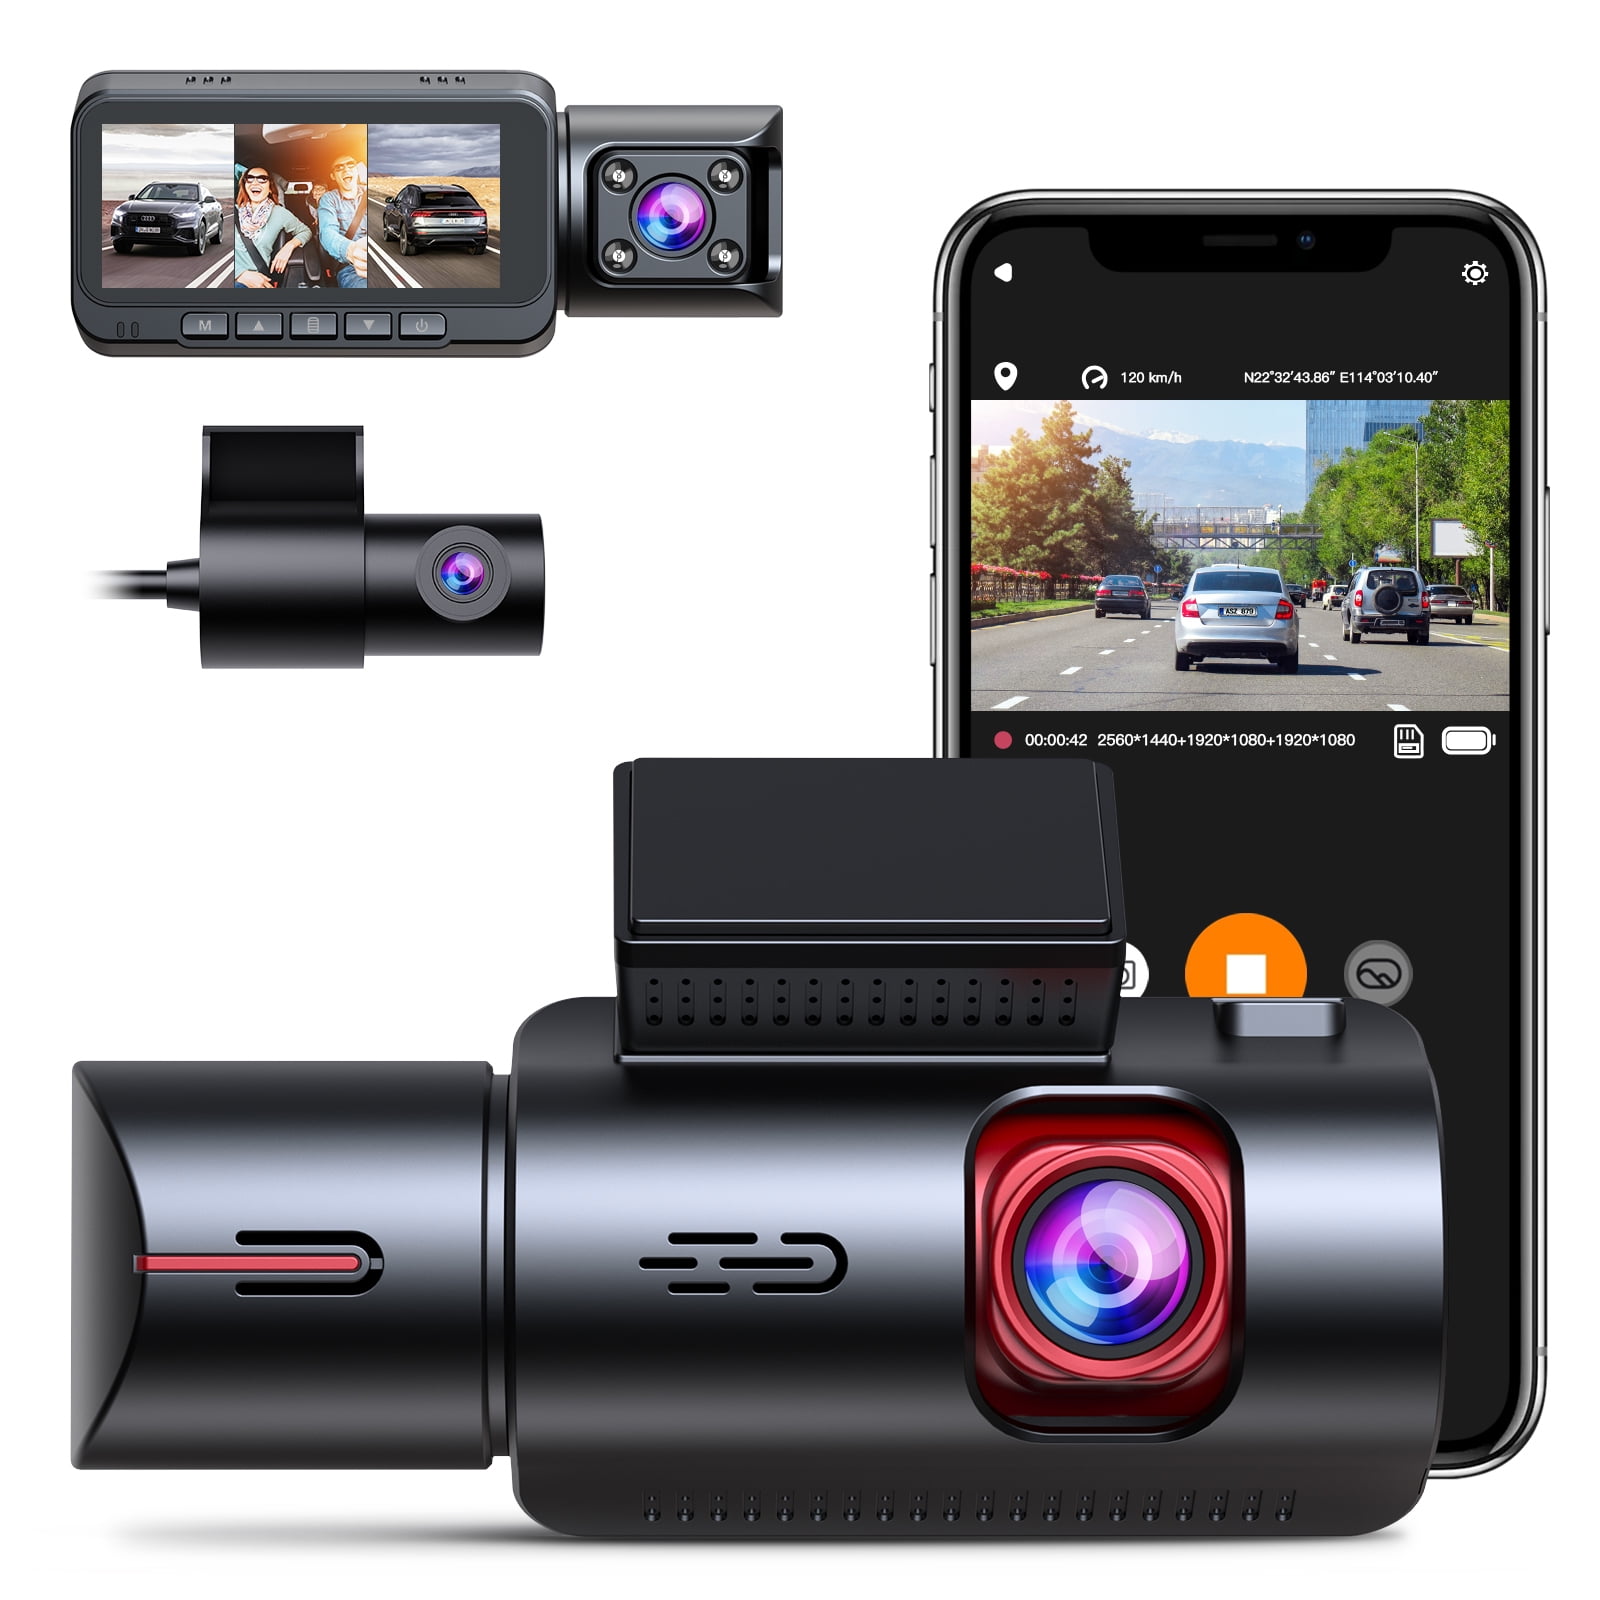 Wifi USB 2 in 1 Car Dash Cam 1080P 170° Wide Angle Car Camera DVR